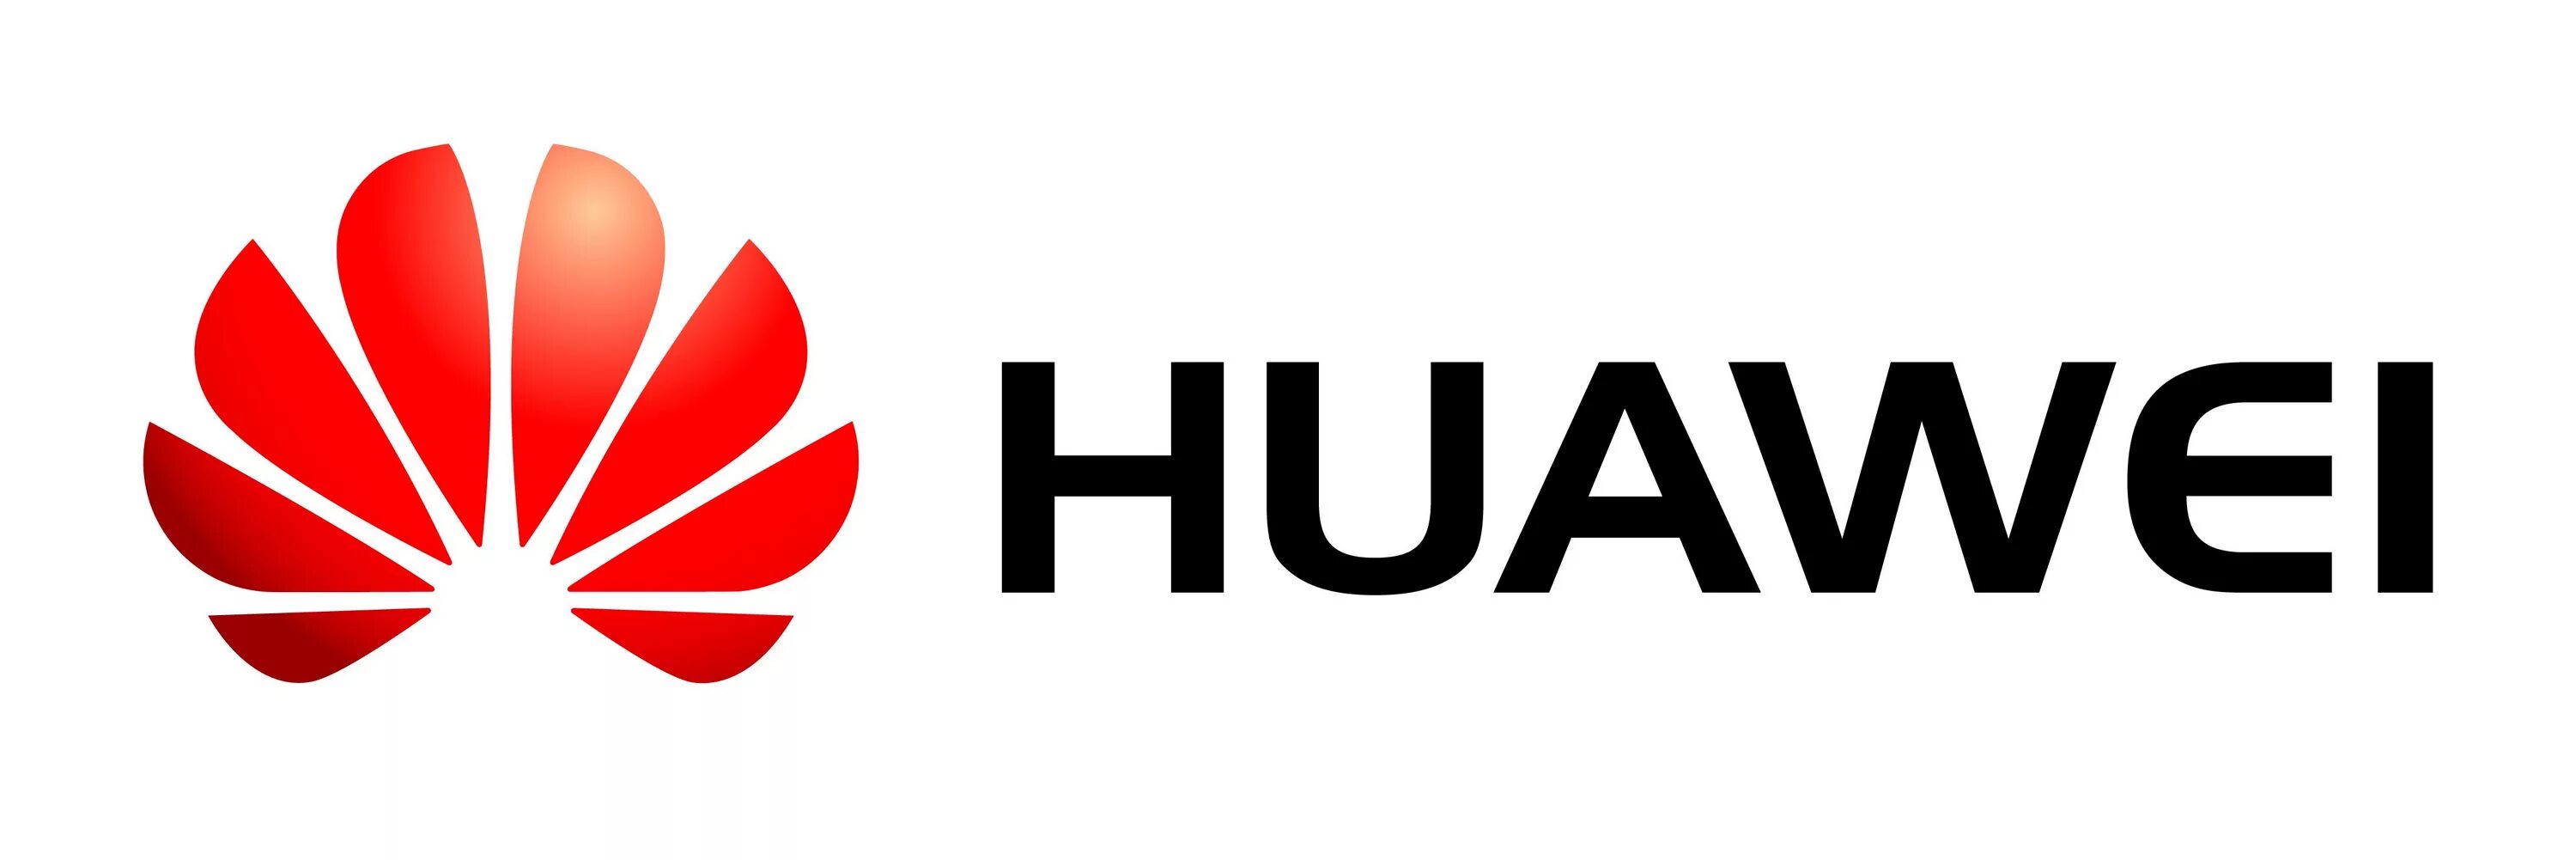 Huawei бренд. Хуавей эмблема. Huawei надпись. Хуавей Технолоджис. User huawei